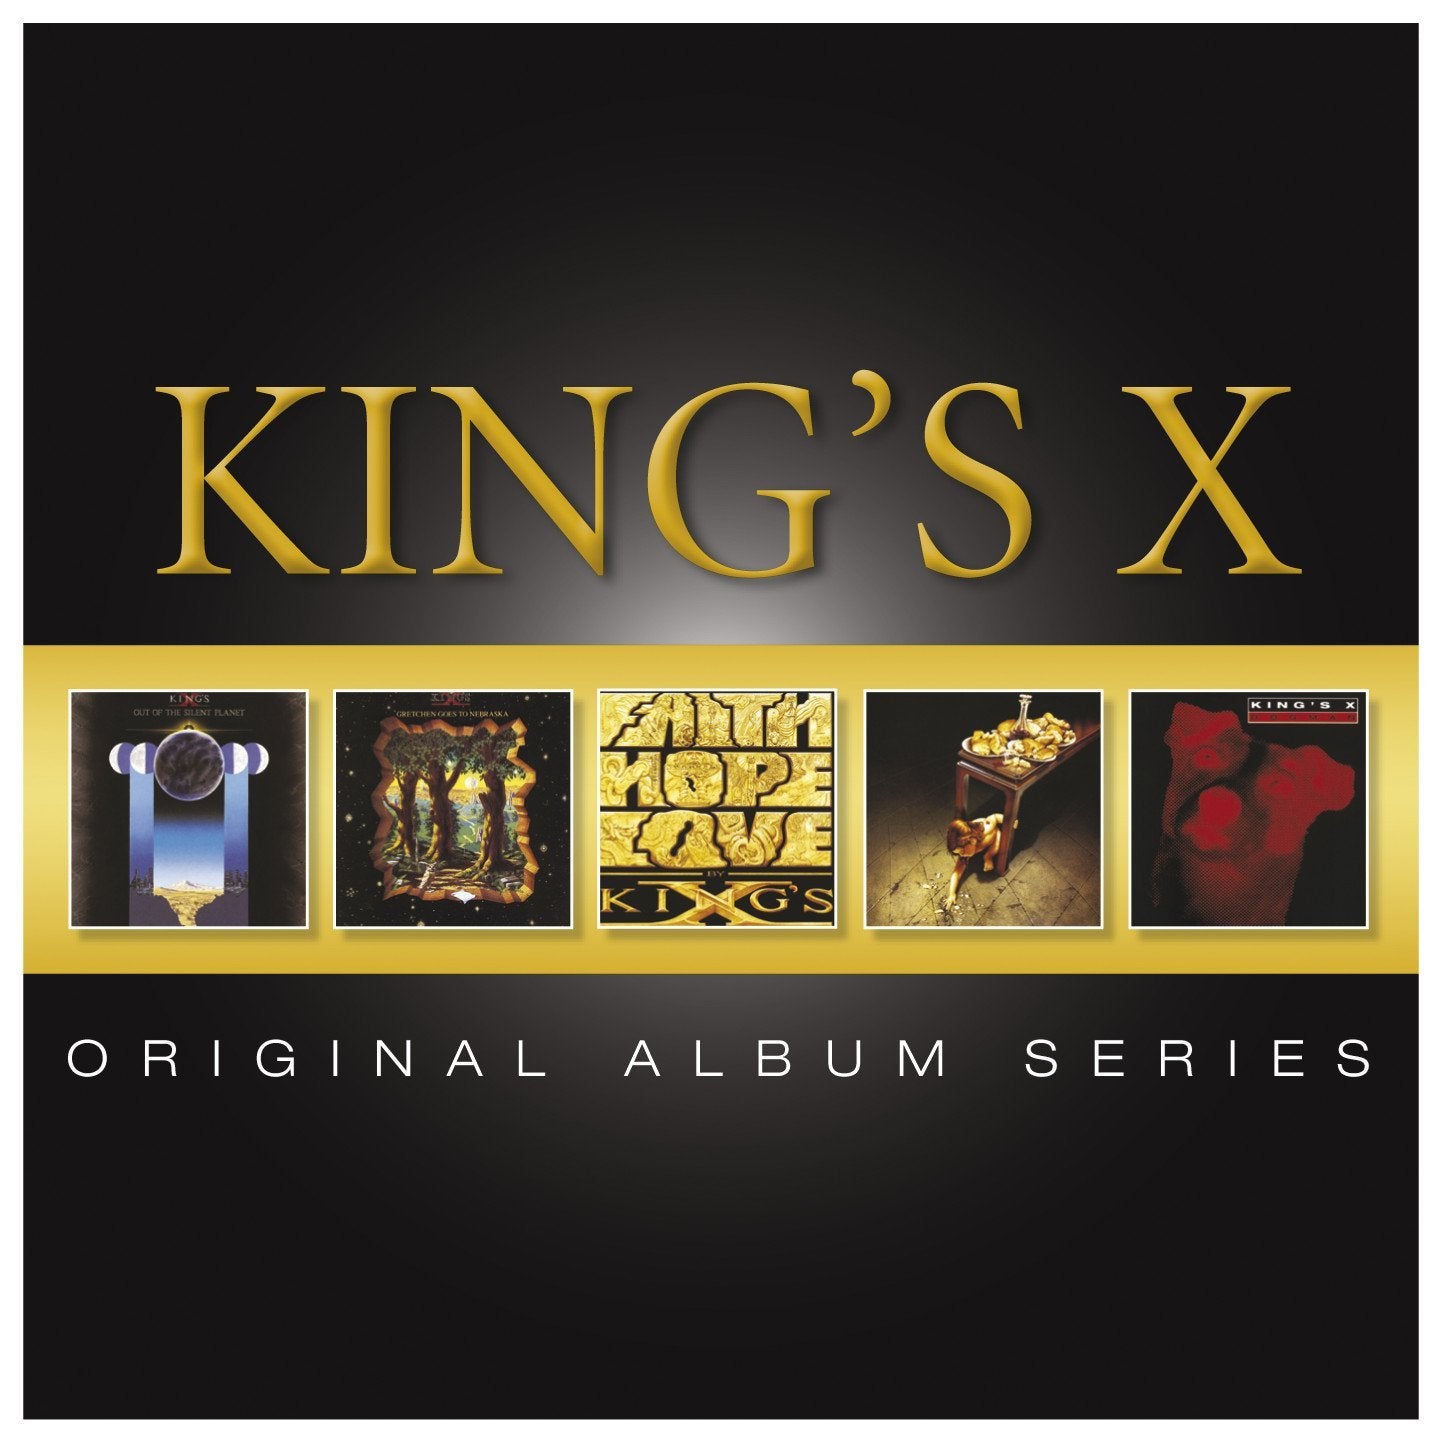 King's X "Original Album Series" 5 CD Box Set